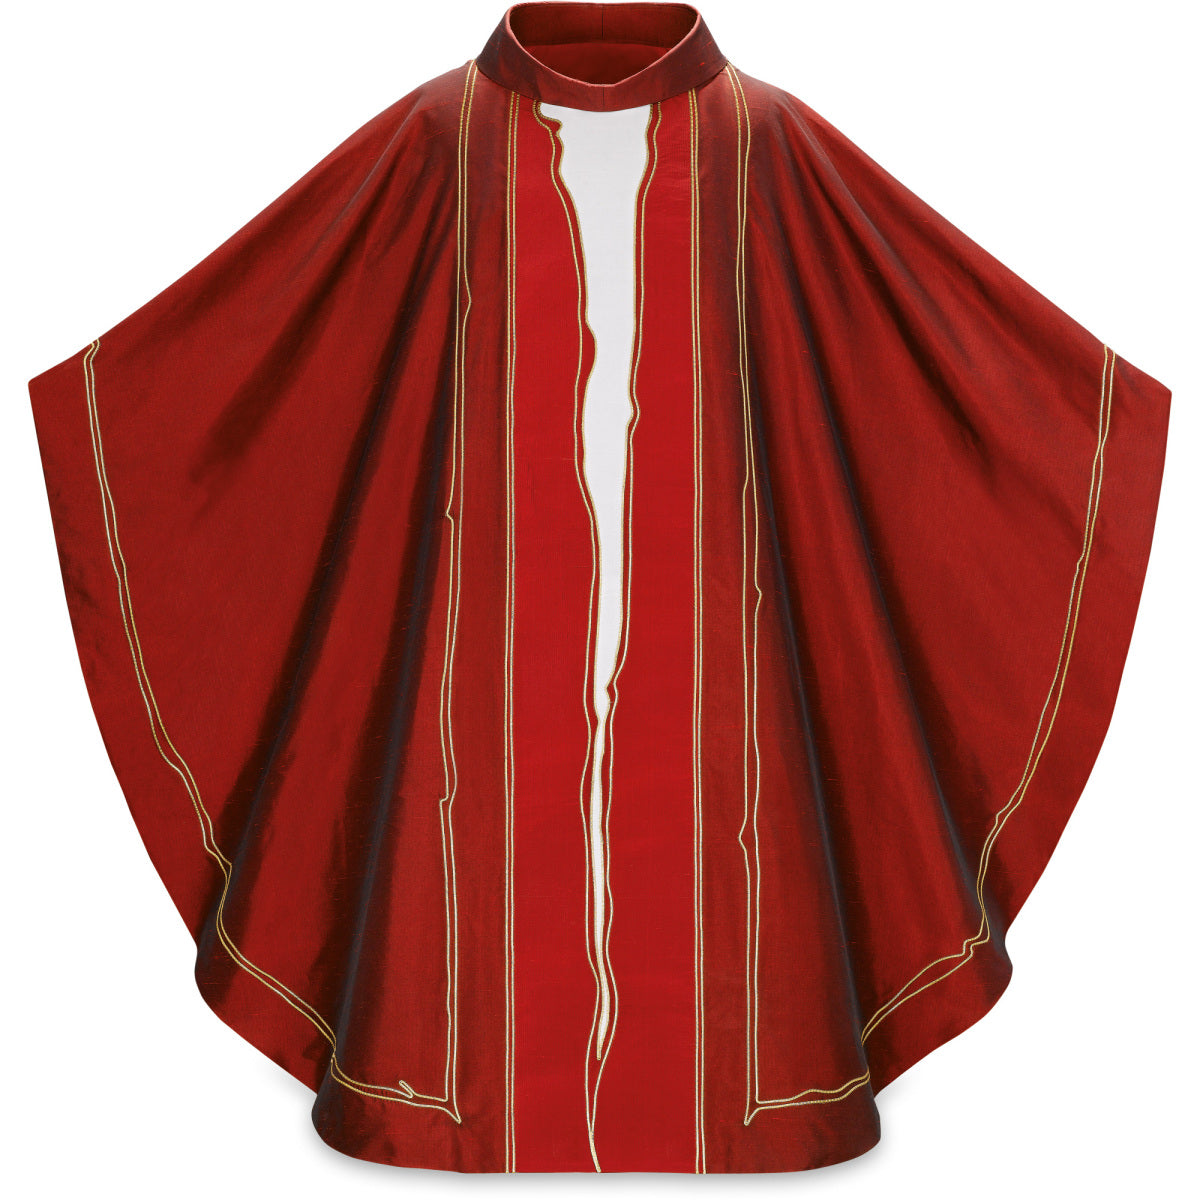 Priest Chasuble | Il Soffio